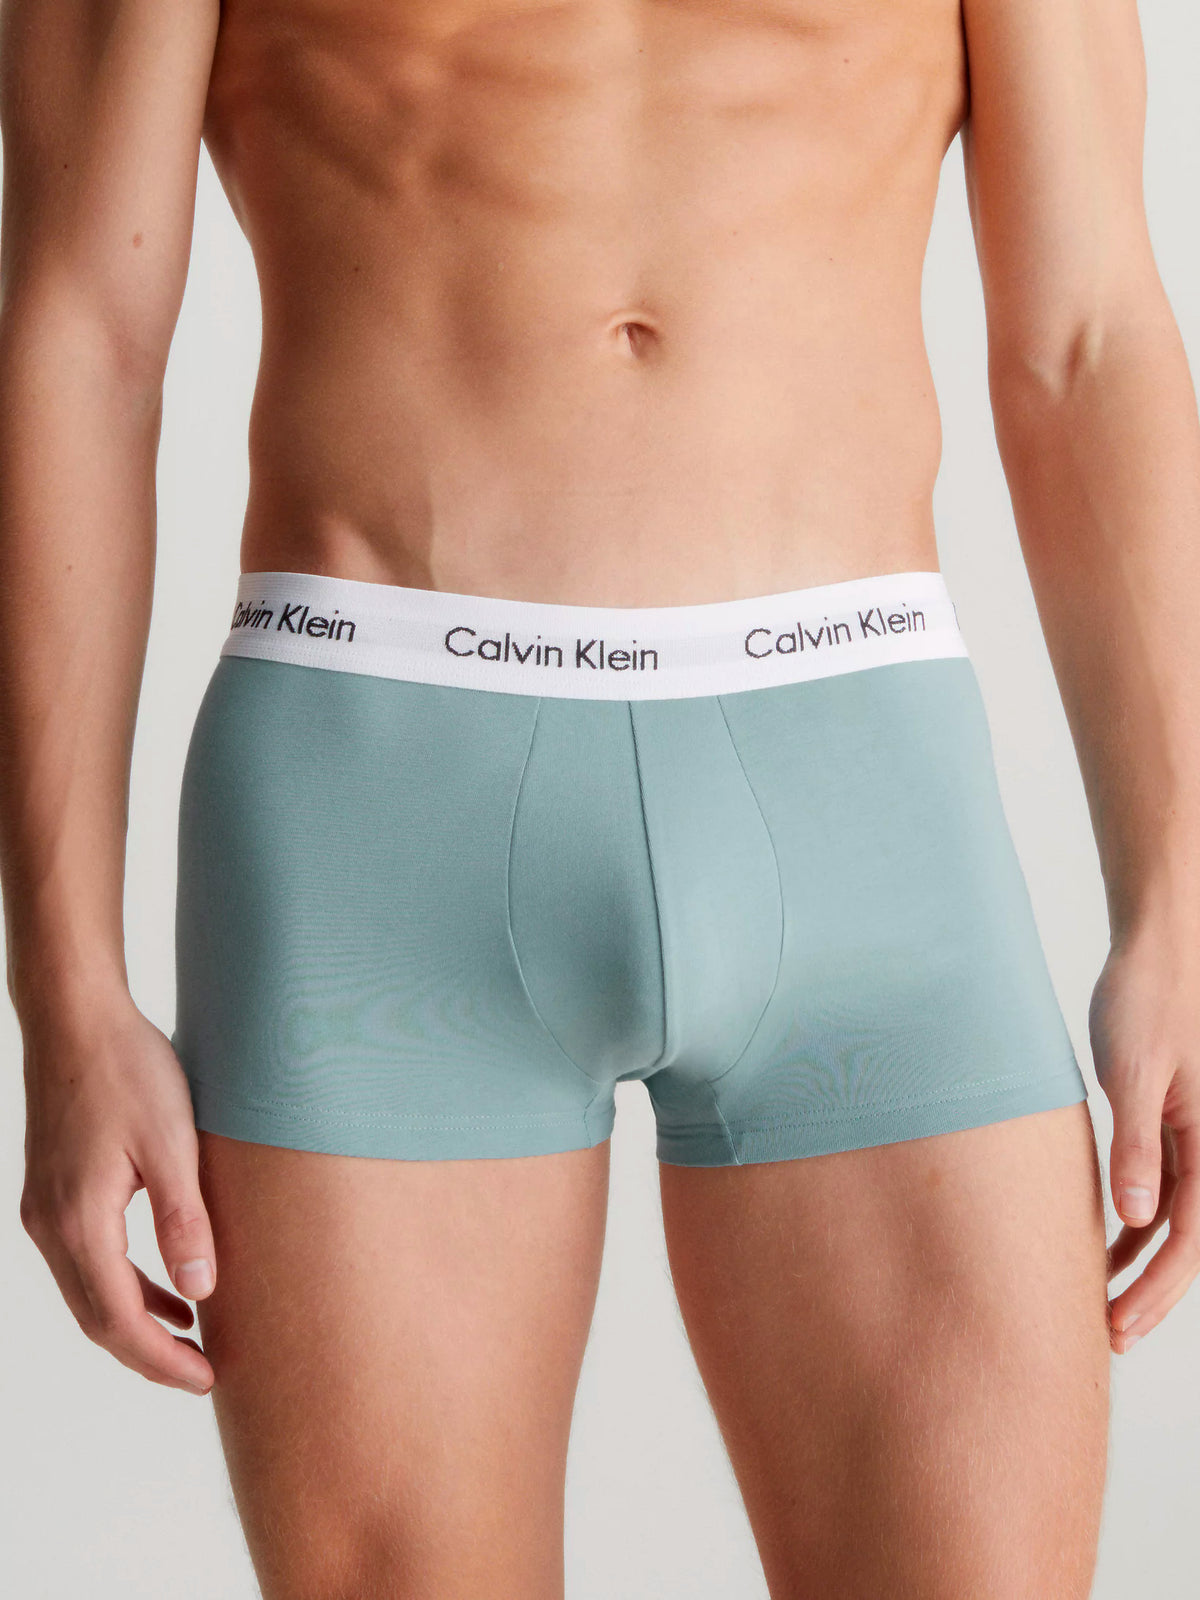 Mens Calvin Klein Boxer Shorts Low Rise Trunks 3 Pack, 02, U2664G, Viv Bl, Arona, Sageb Grn W/ Wh Wbs